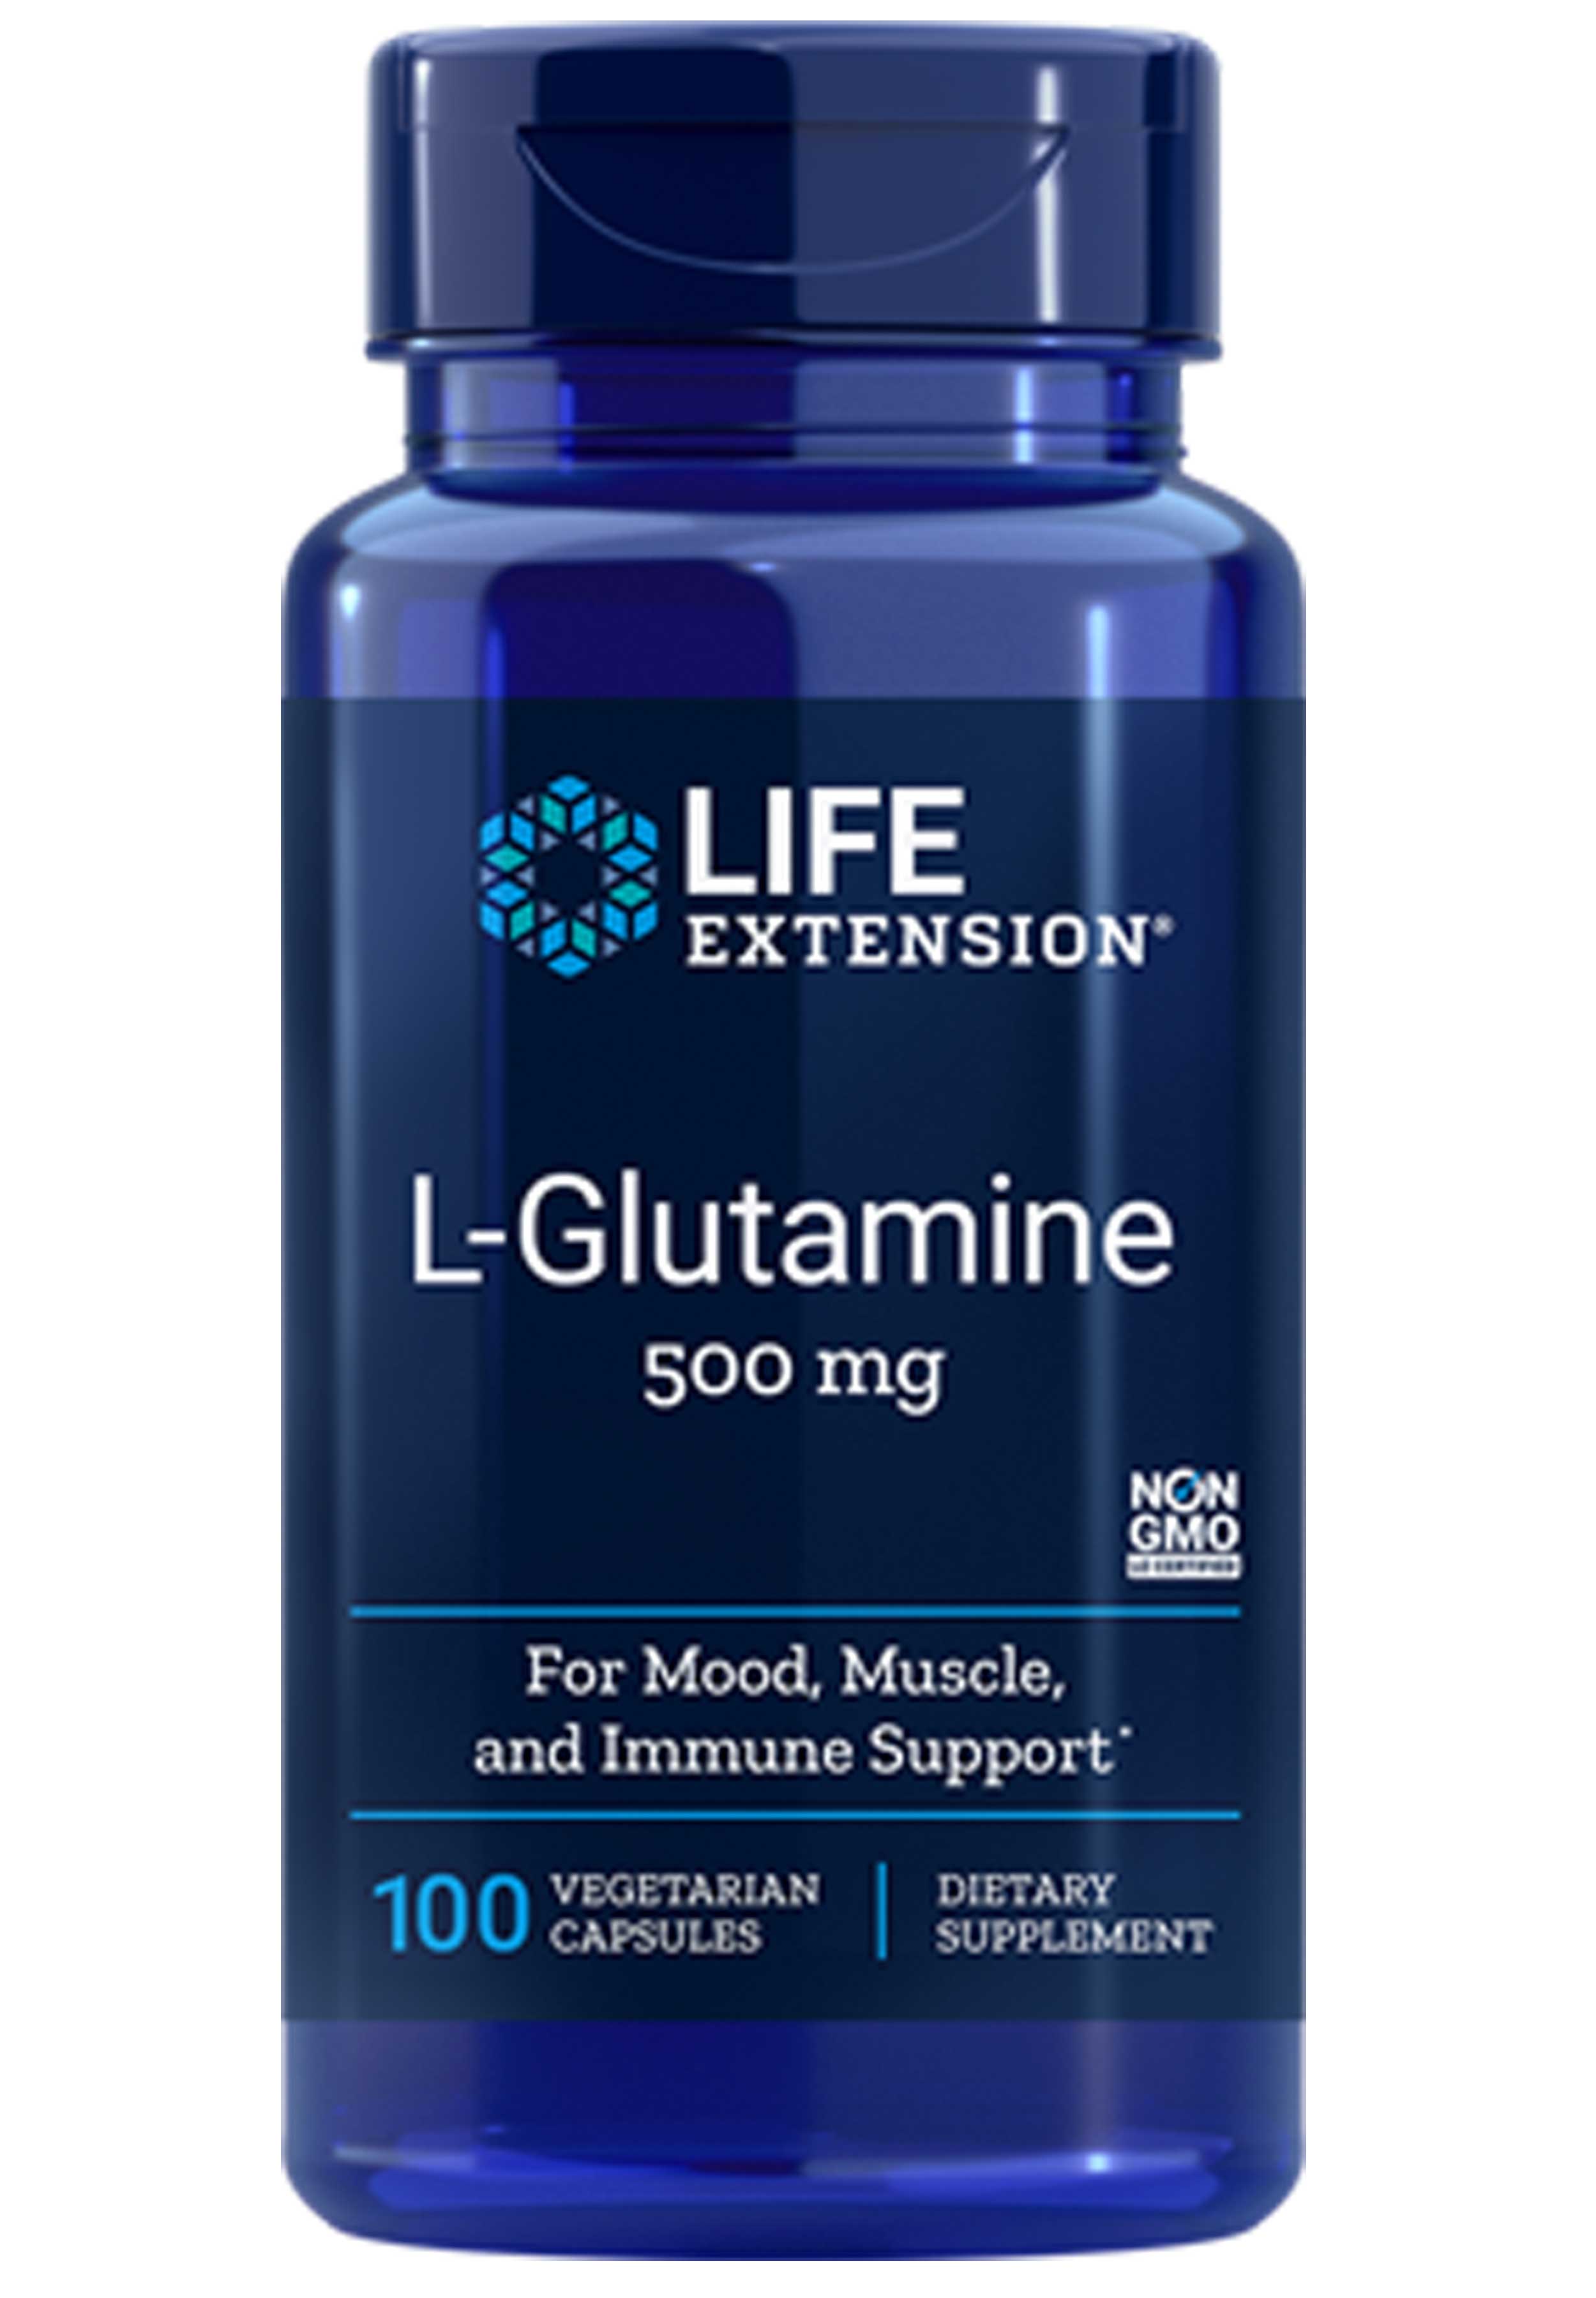 Life Extension L-Glutamine